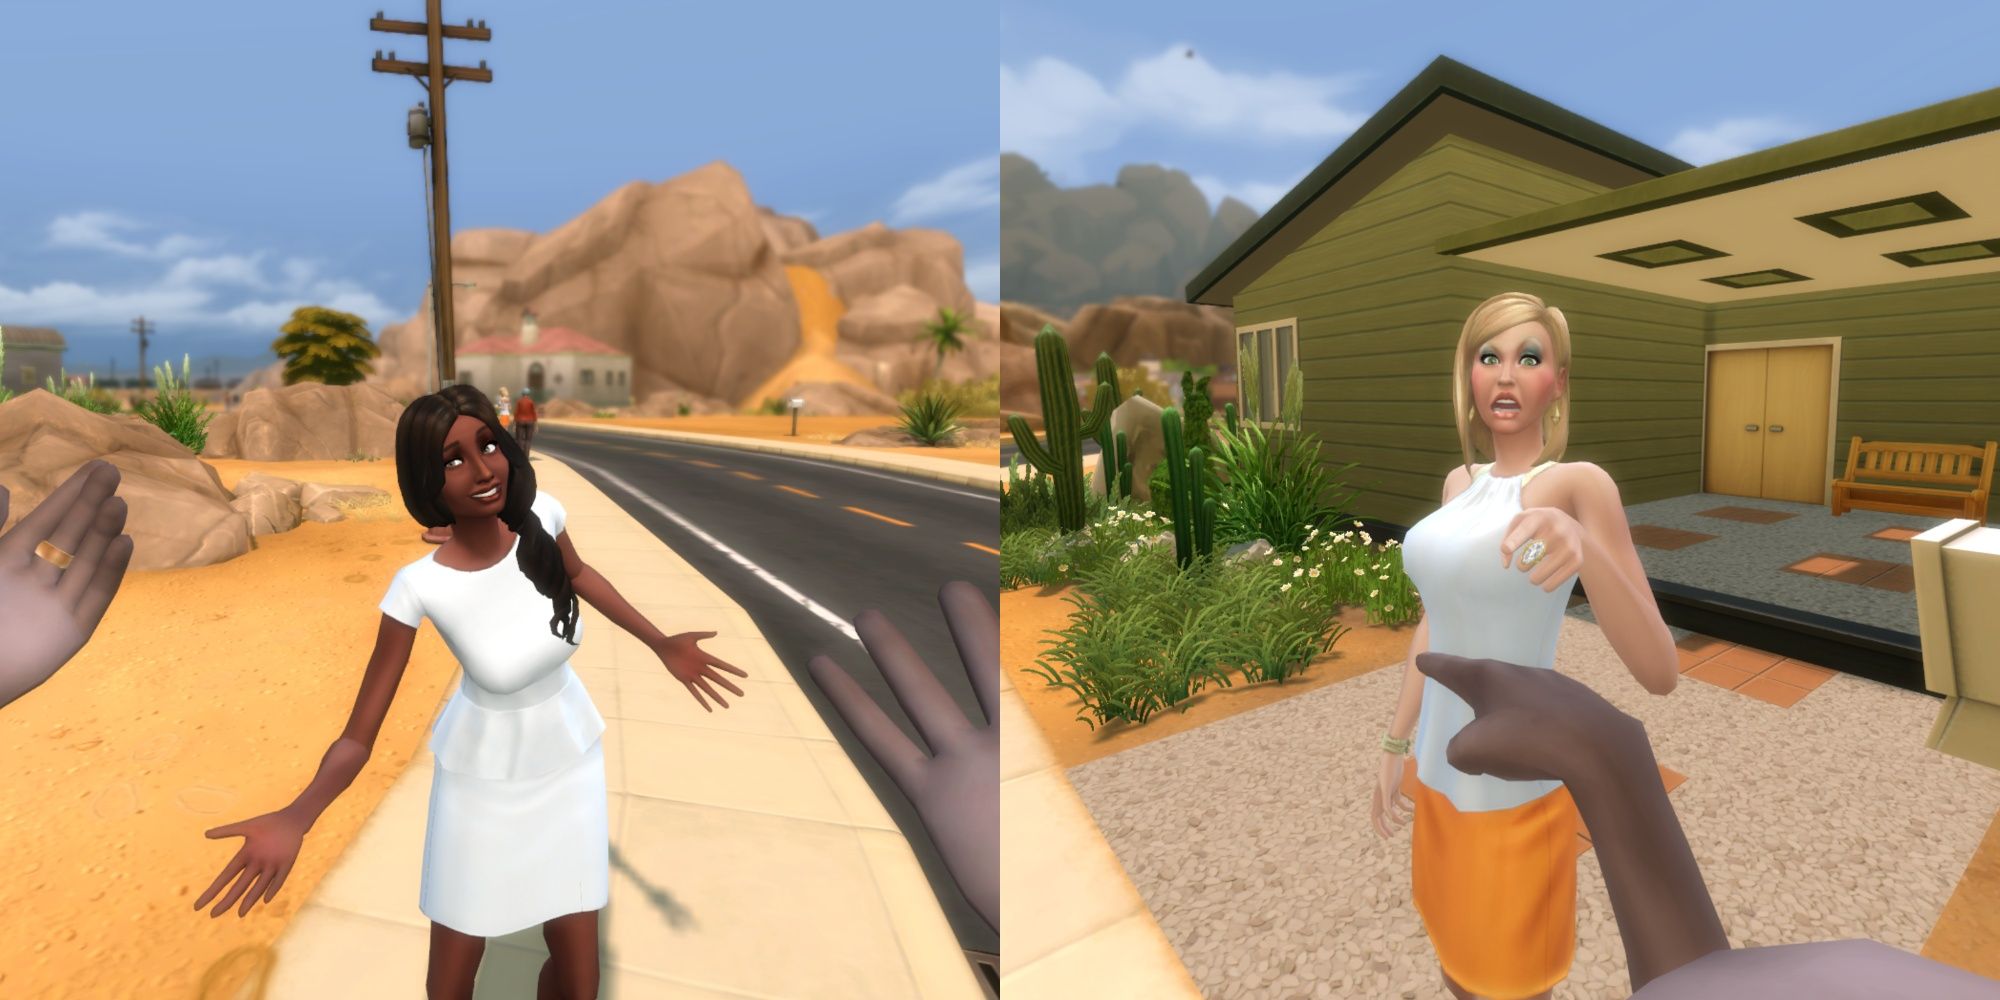 Do my sims have weird or similar faces? : r/Sims4